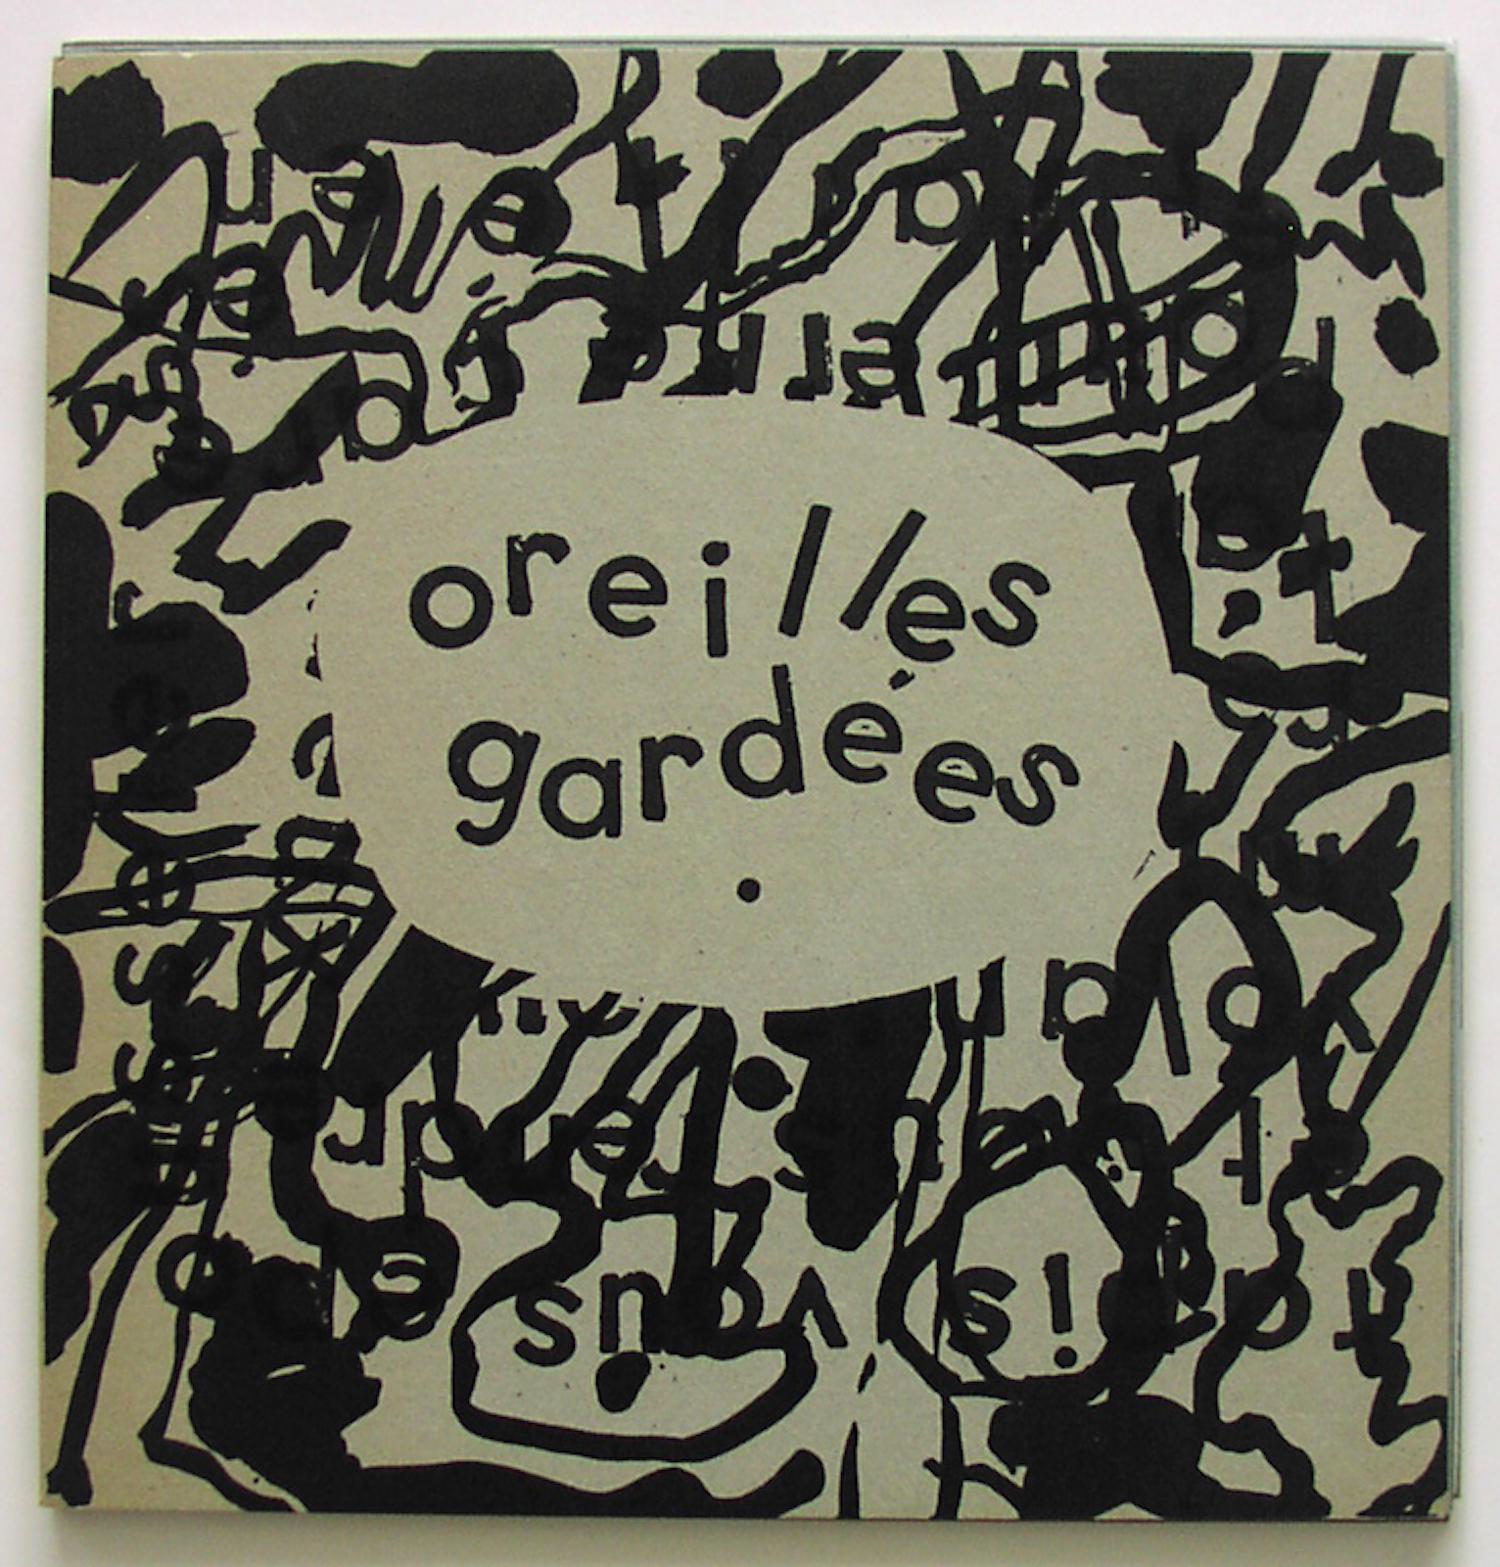 Oreilles gardees, by P.A. Benoit. Paris: PAB, 1962.  - Print by Jean Dubuffet